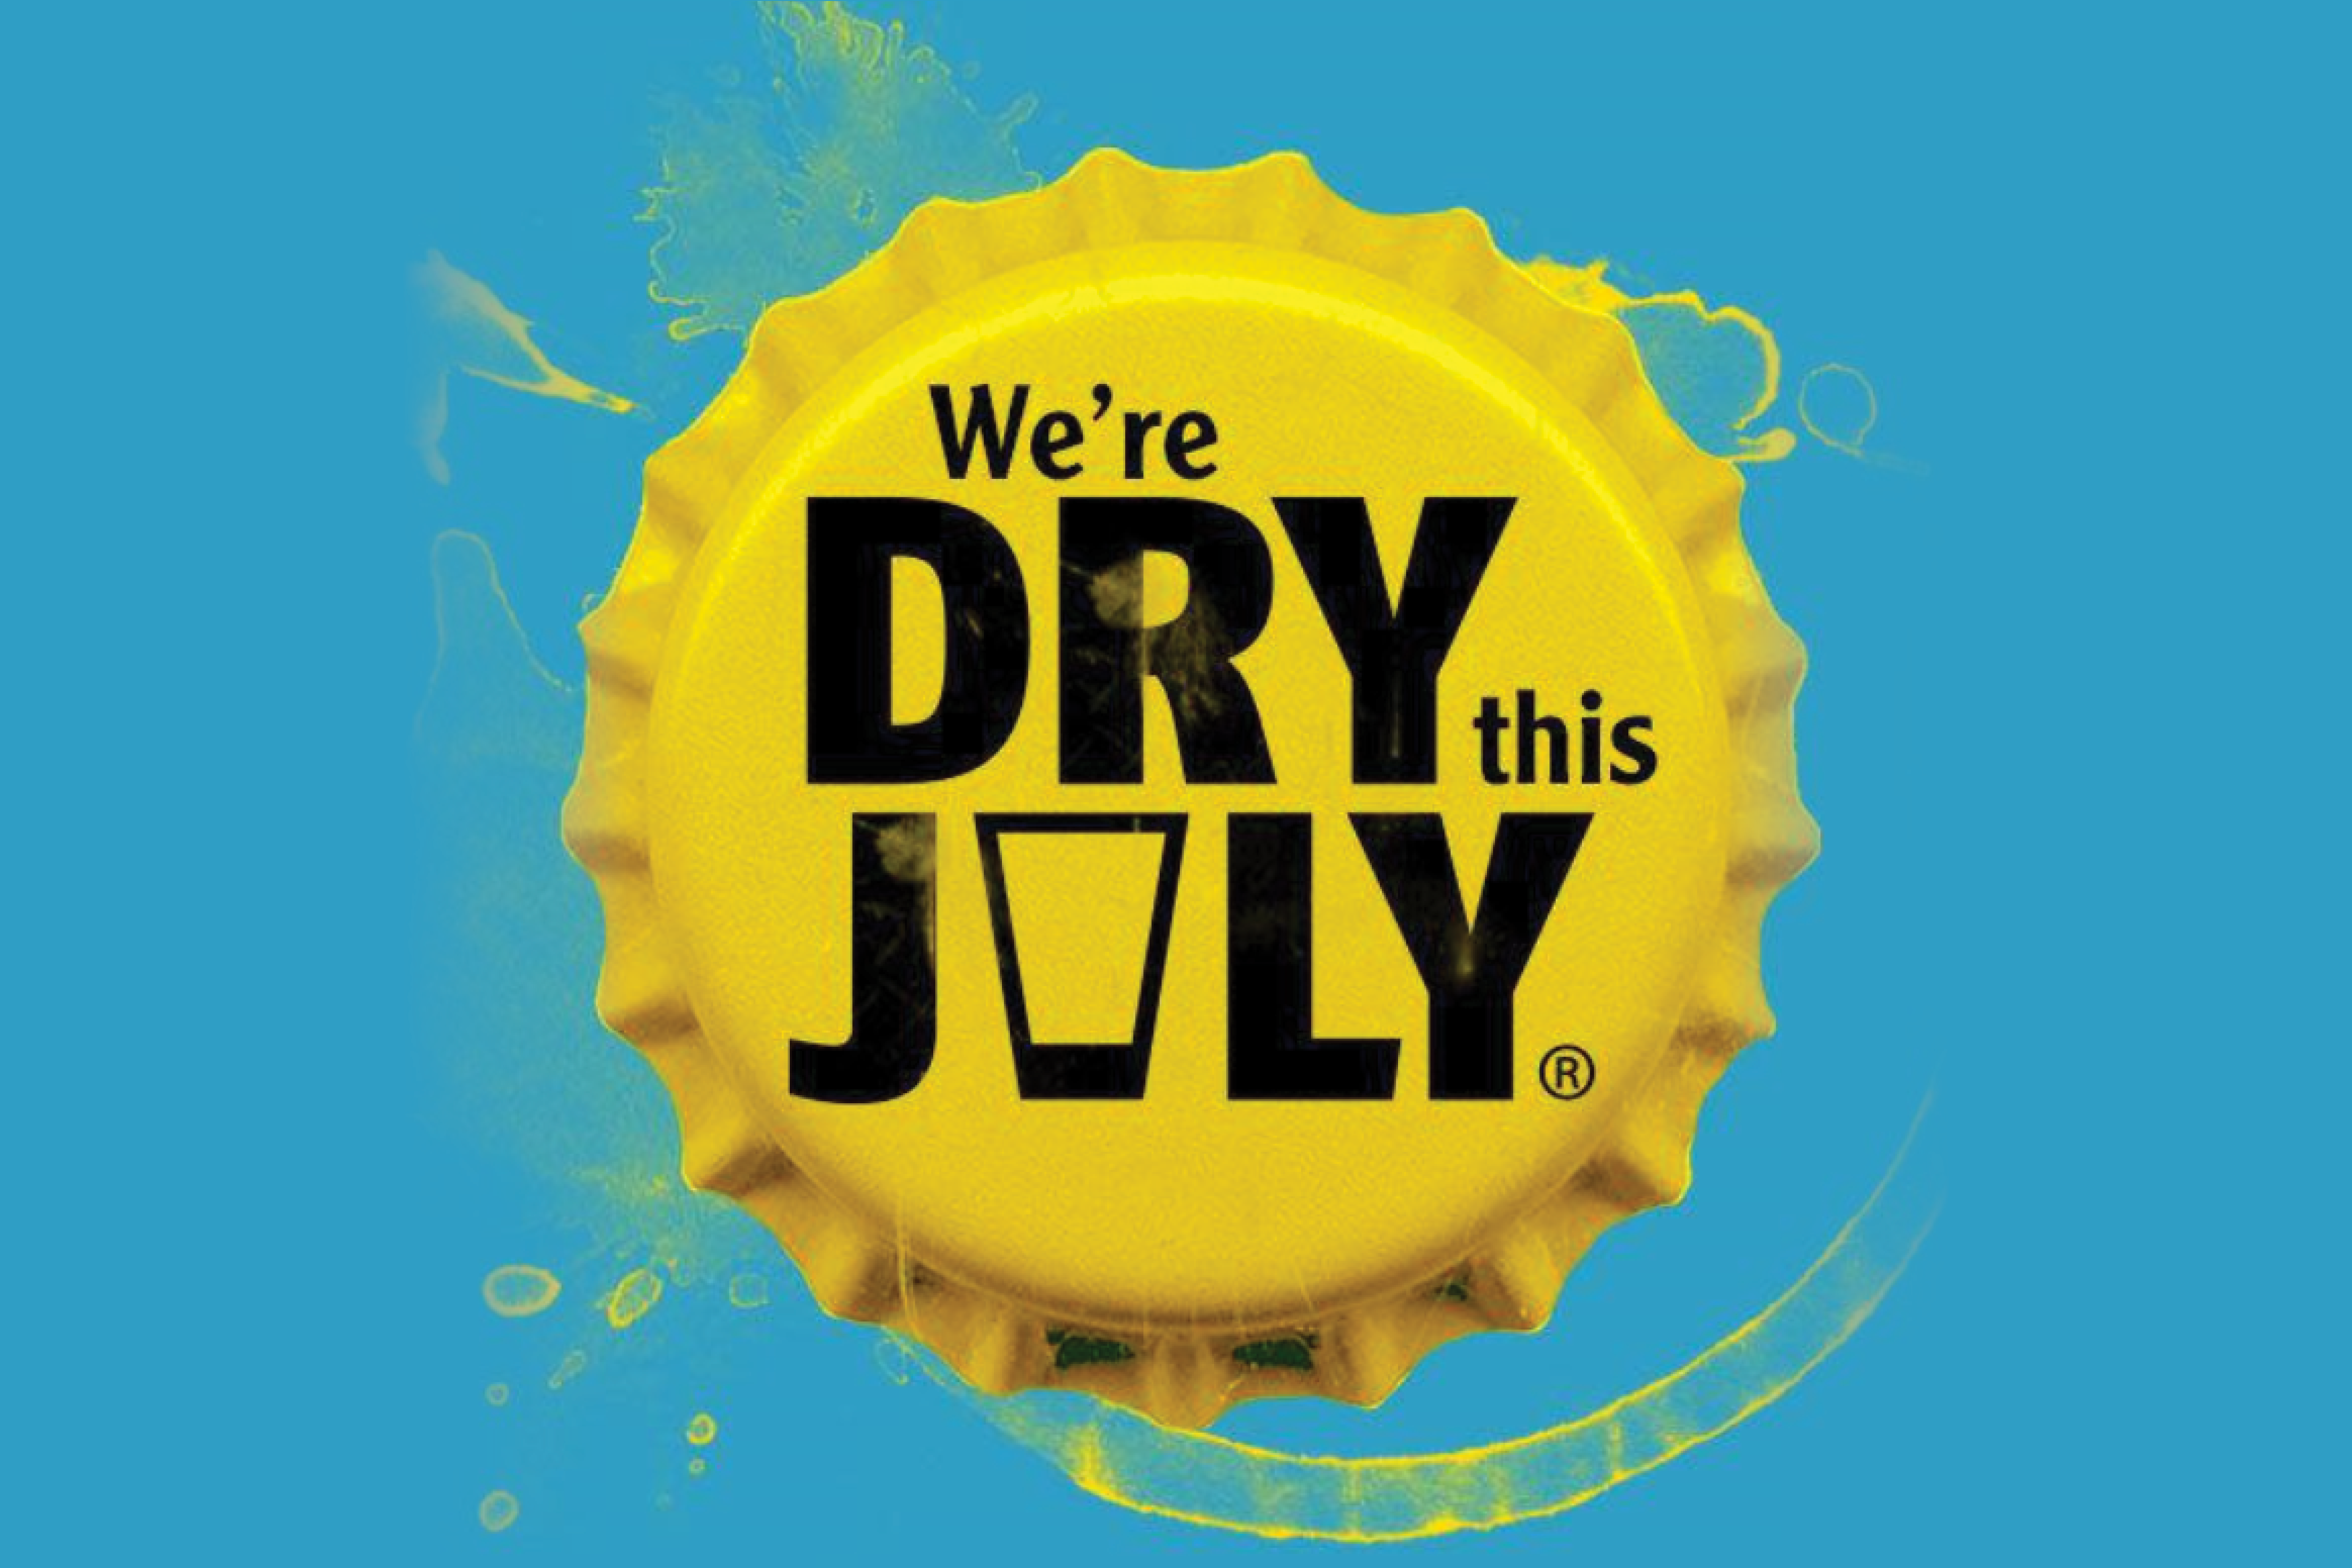 Dry July